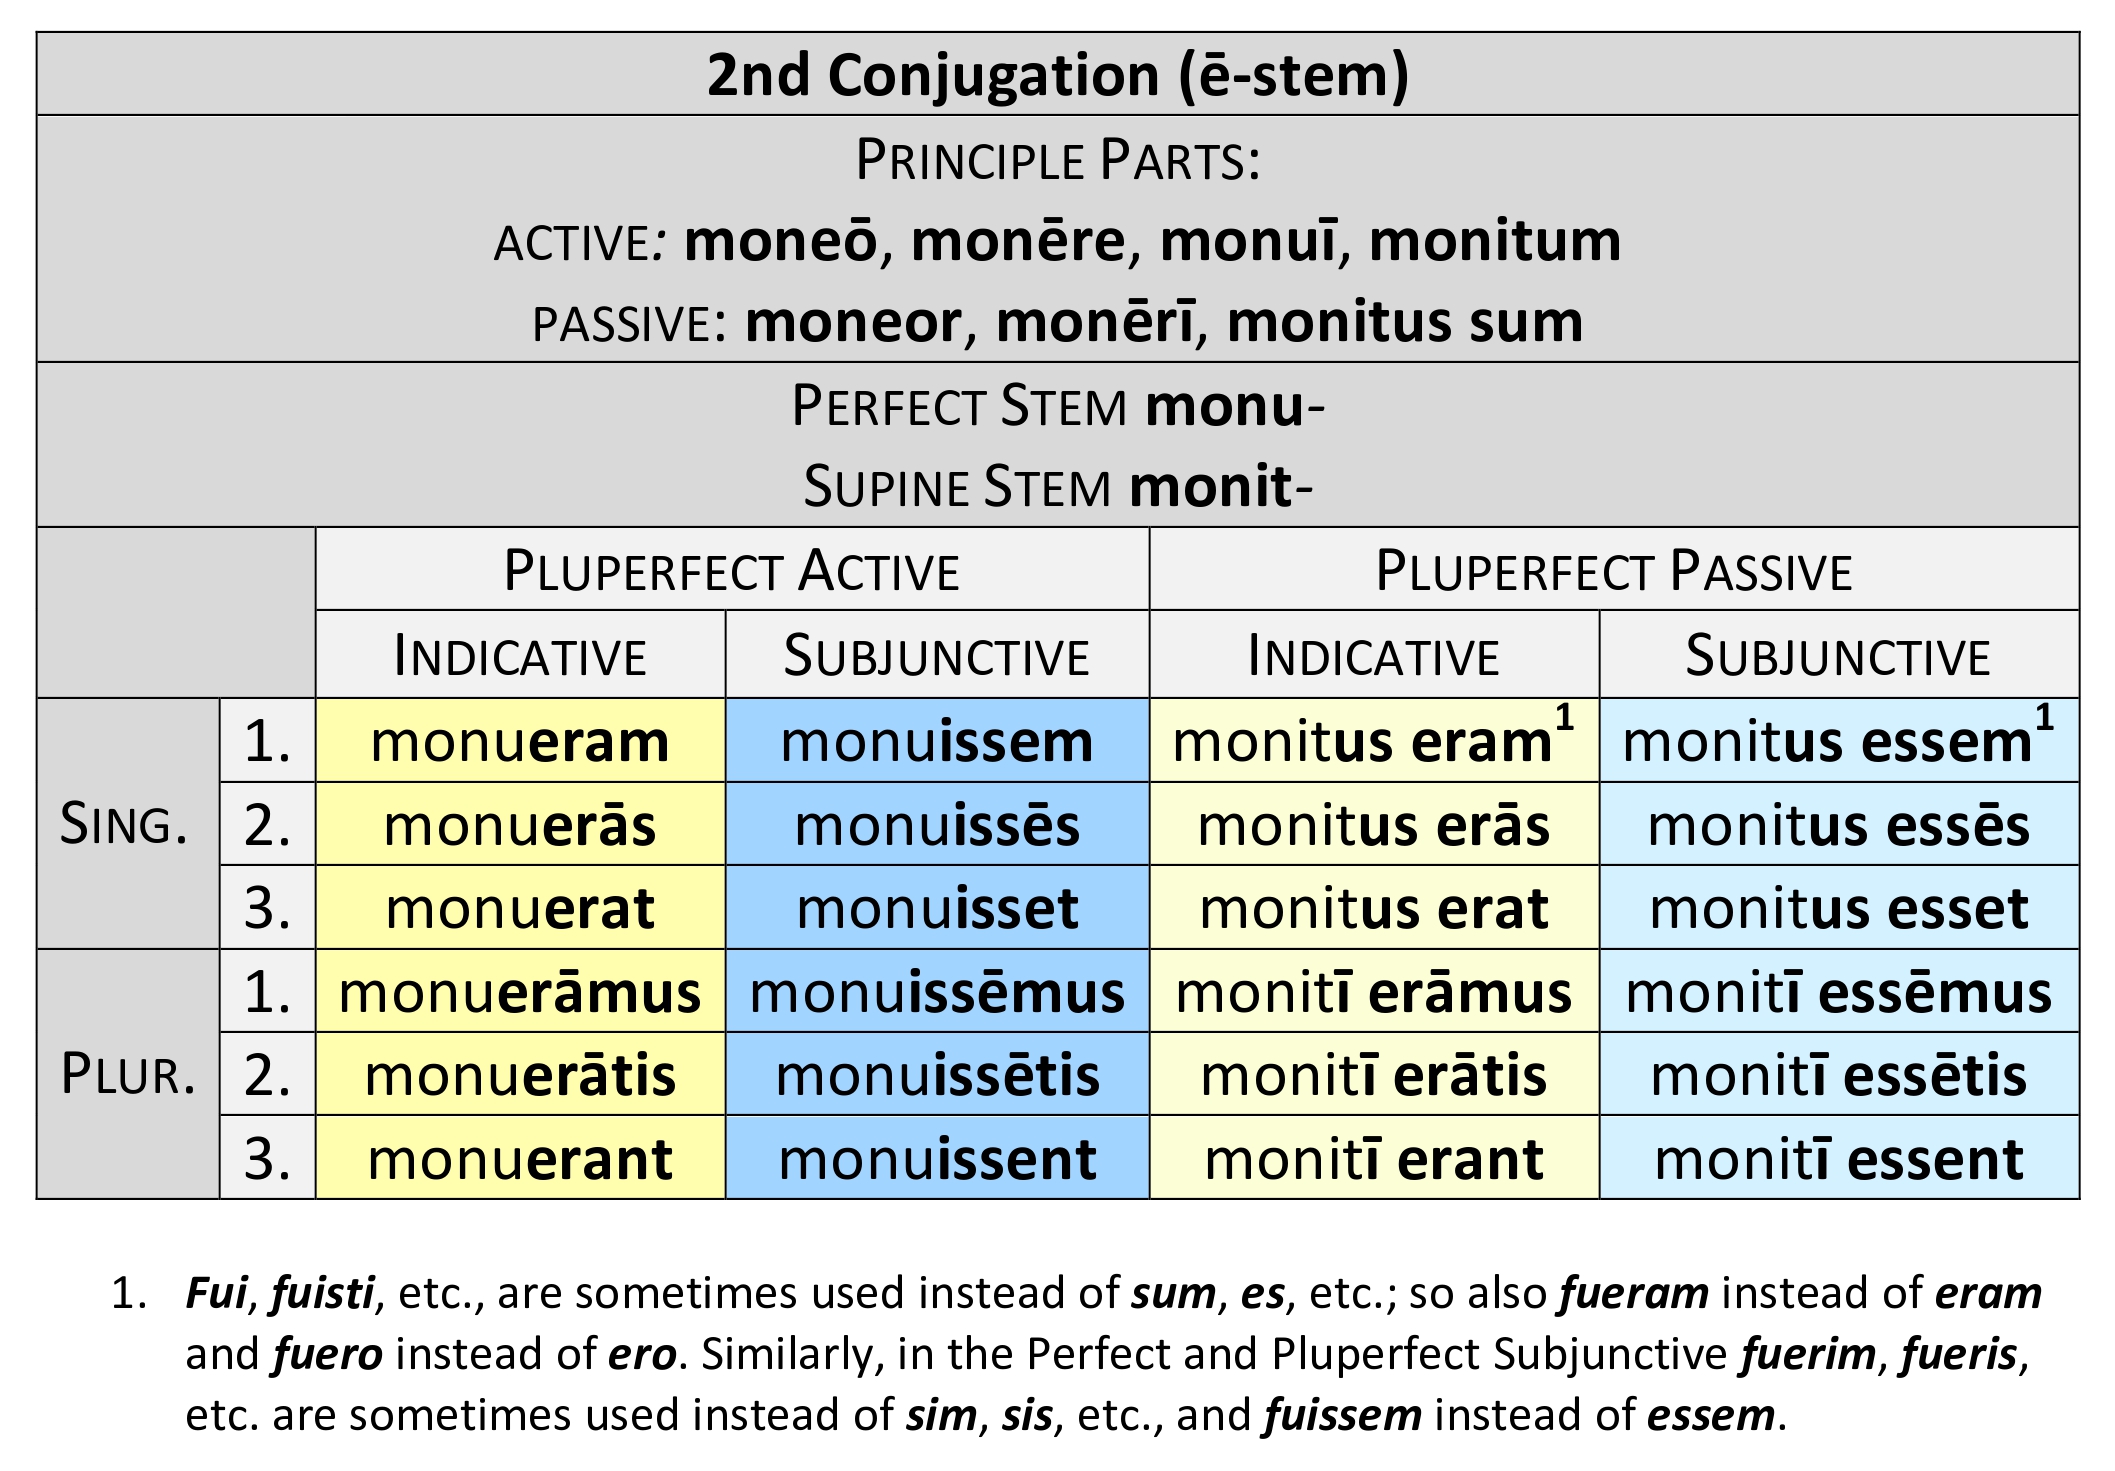  2nd Conjugation ē-stem Pluperfect paradigm